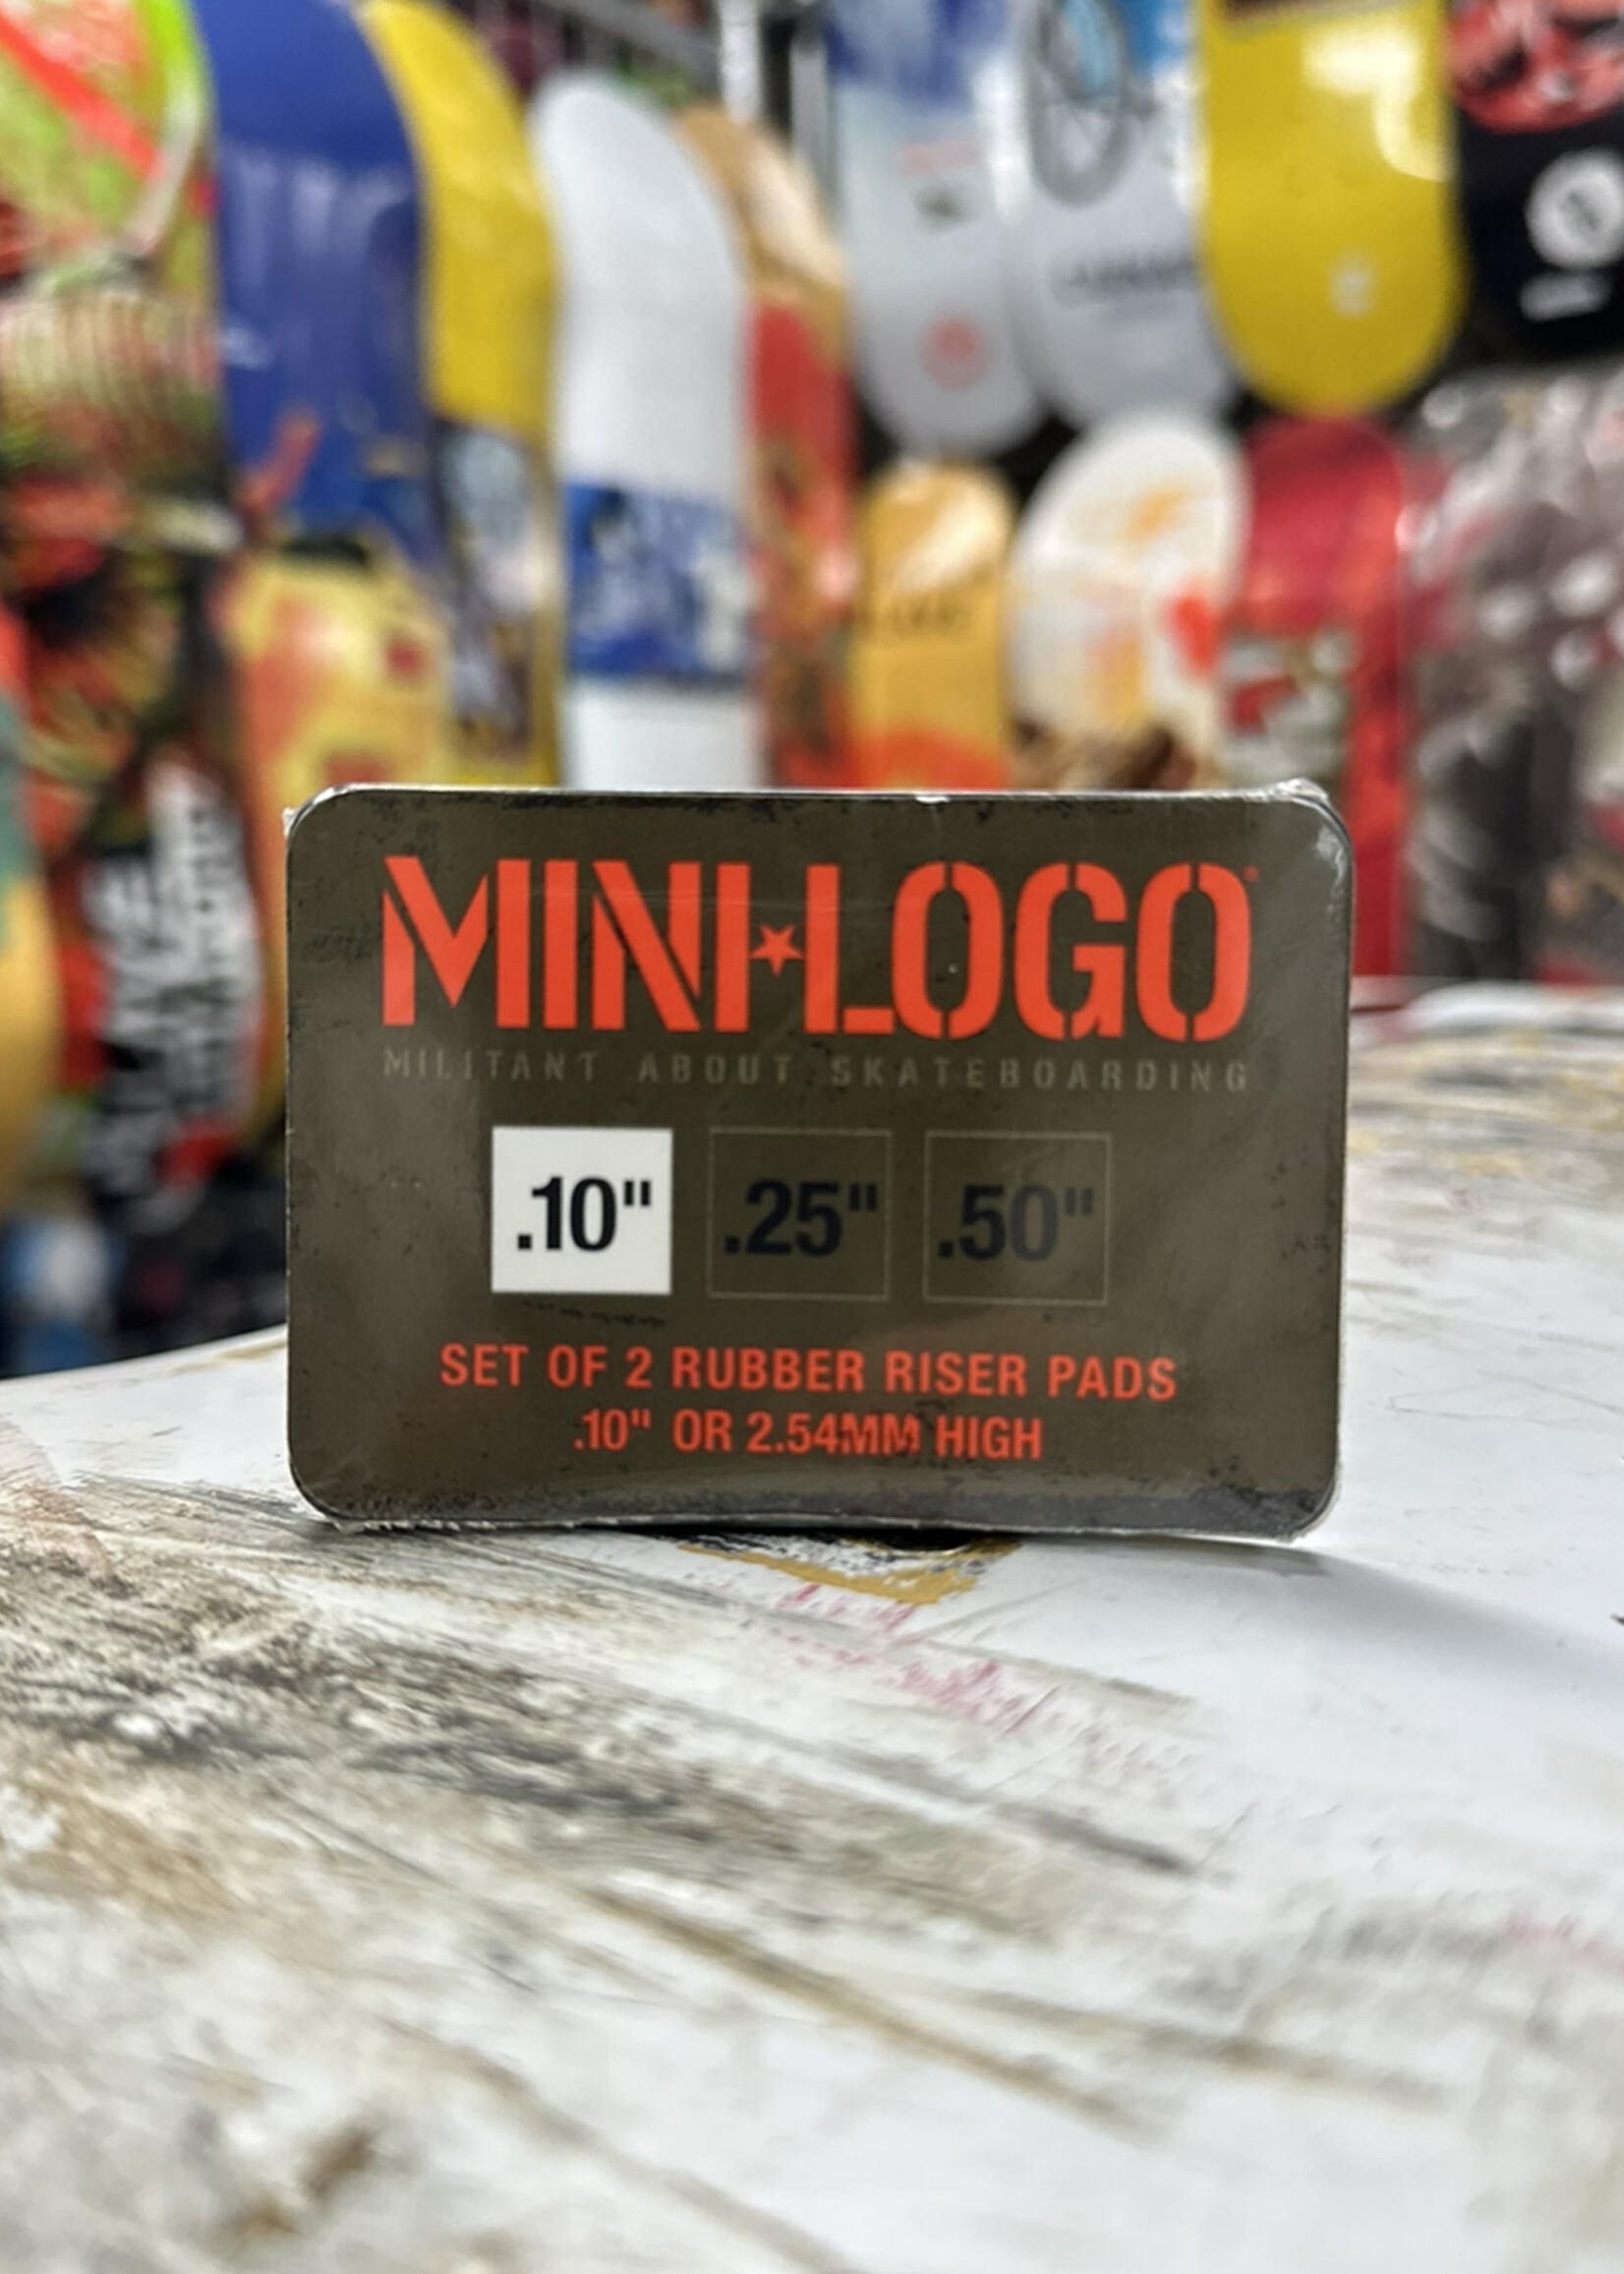 Mini Logo MINI LOGO - Rubber Riser Pads Pair - 0.10" (2.54mm)